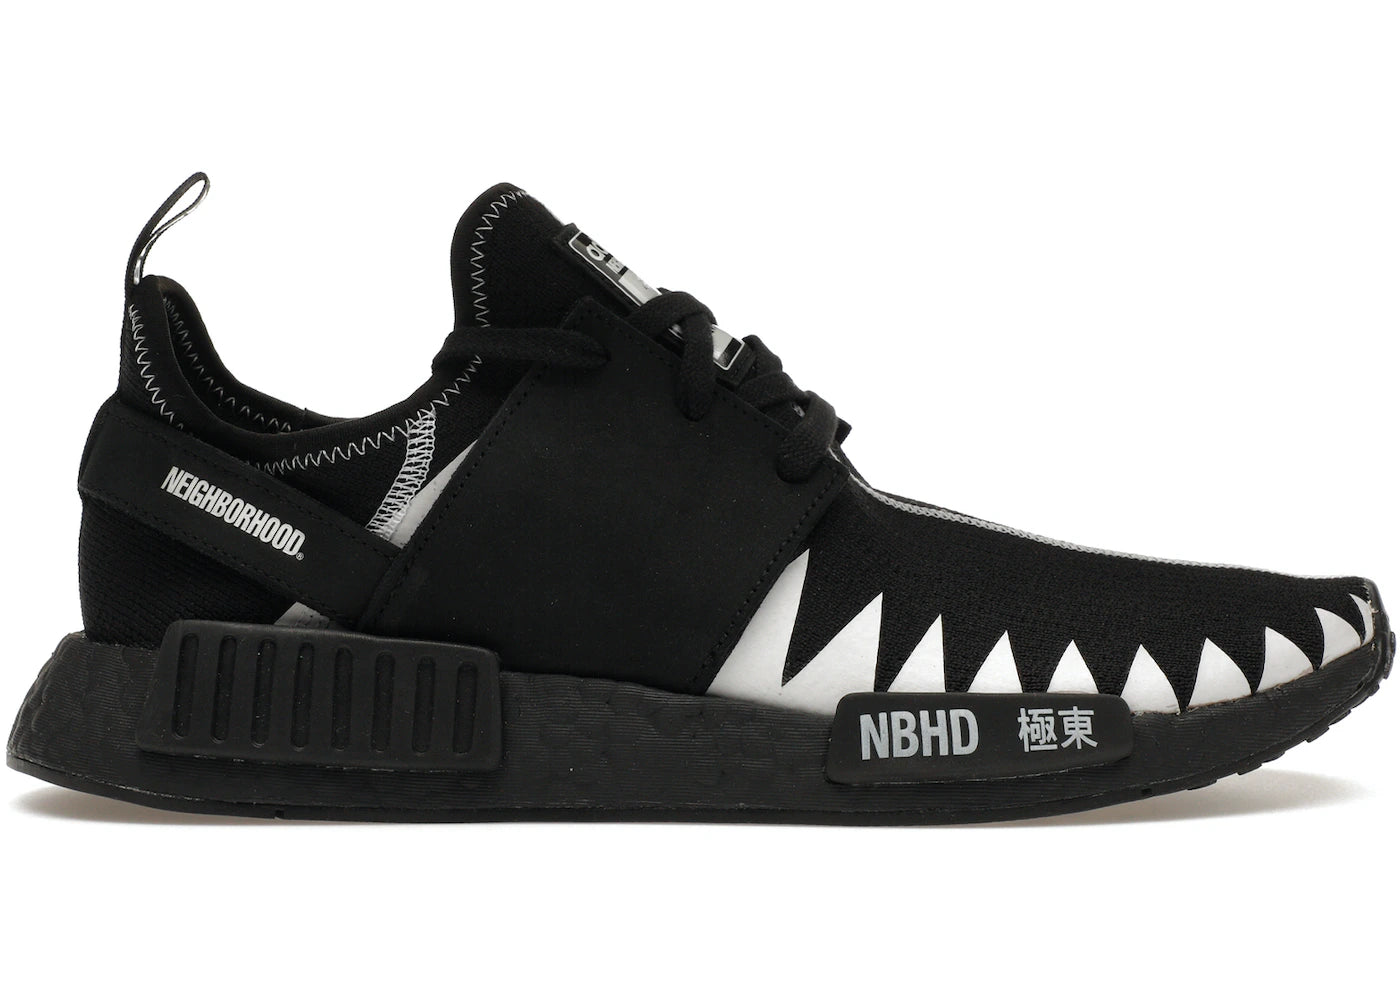 Adidas NMD R1 'Neighborhood Core Black'